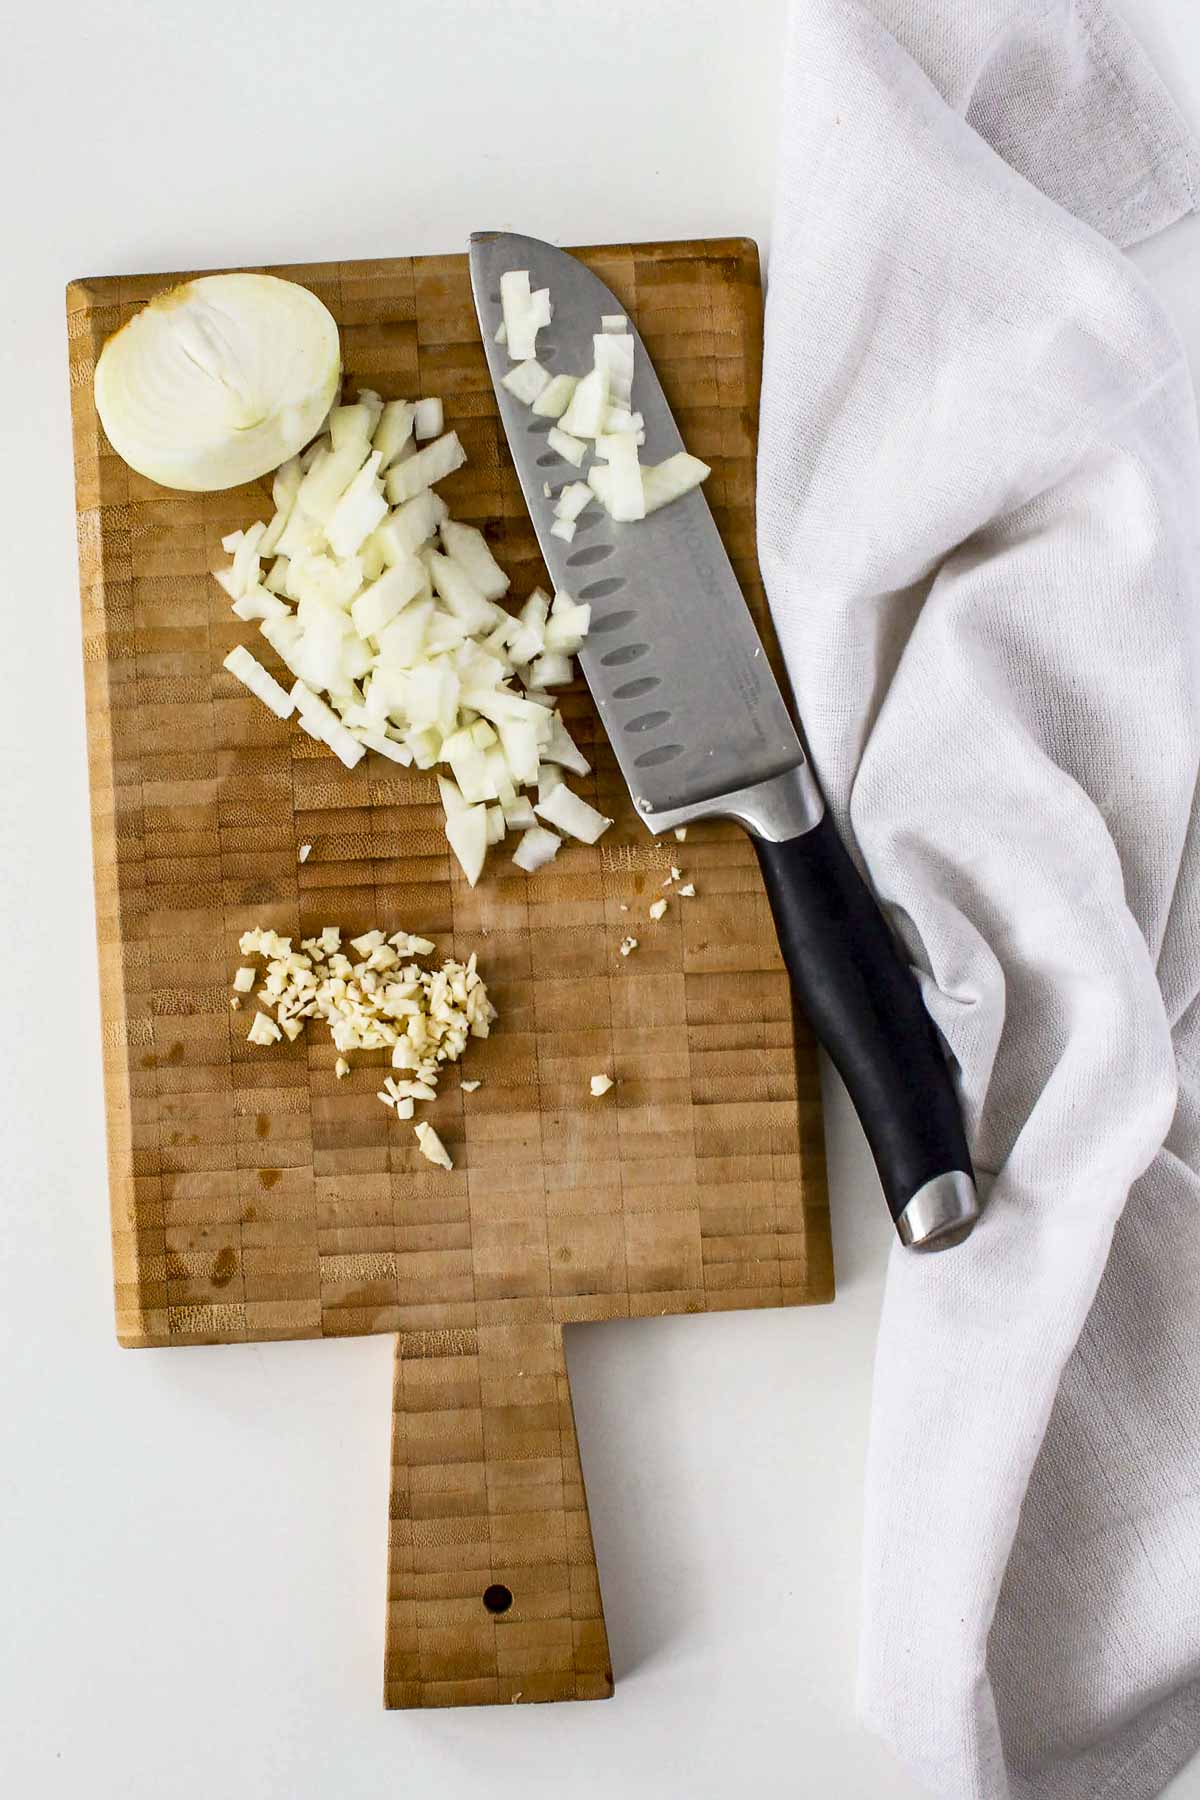 Diced onions and garlic on a cutting board.